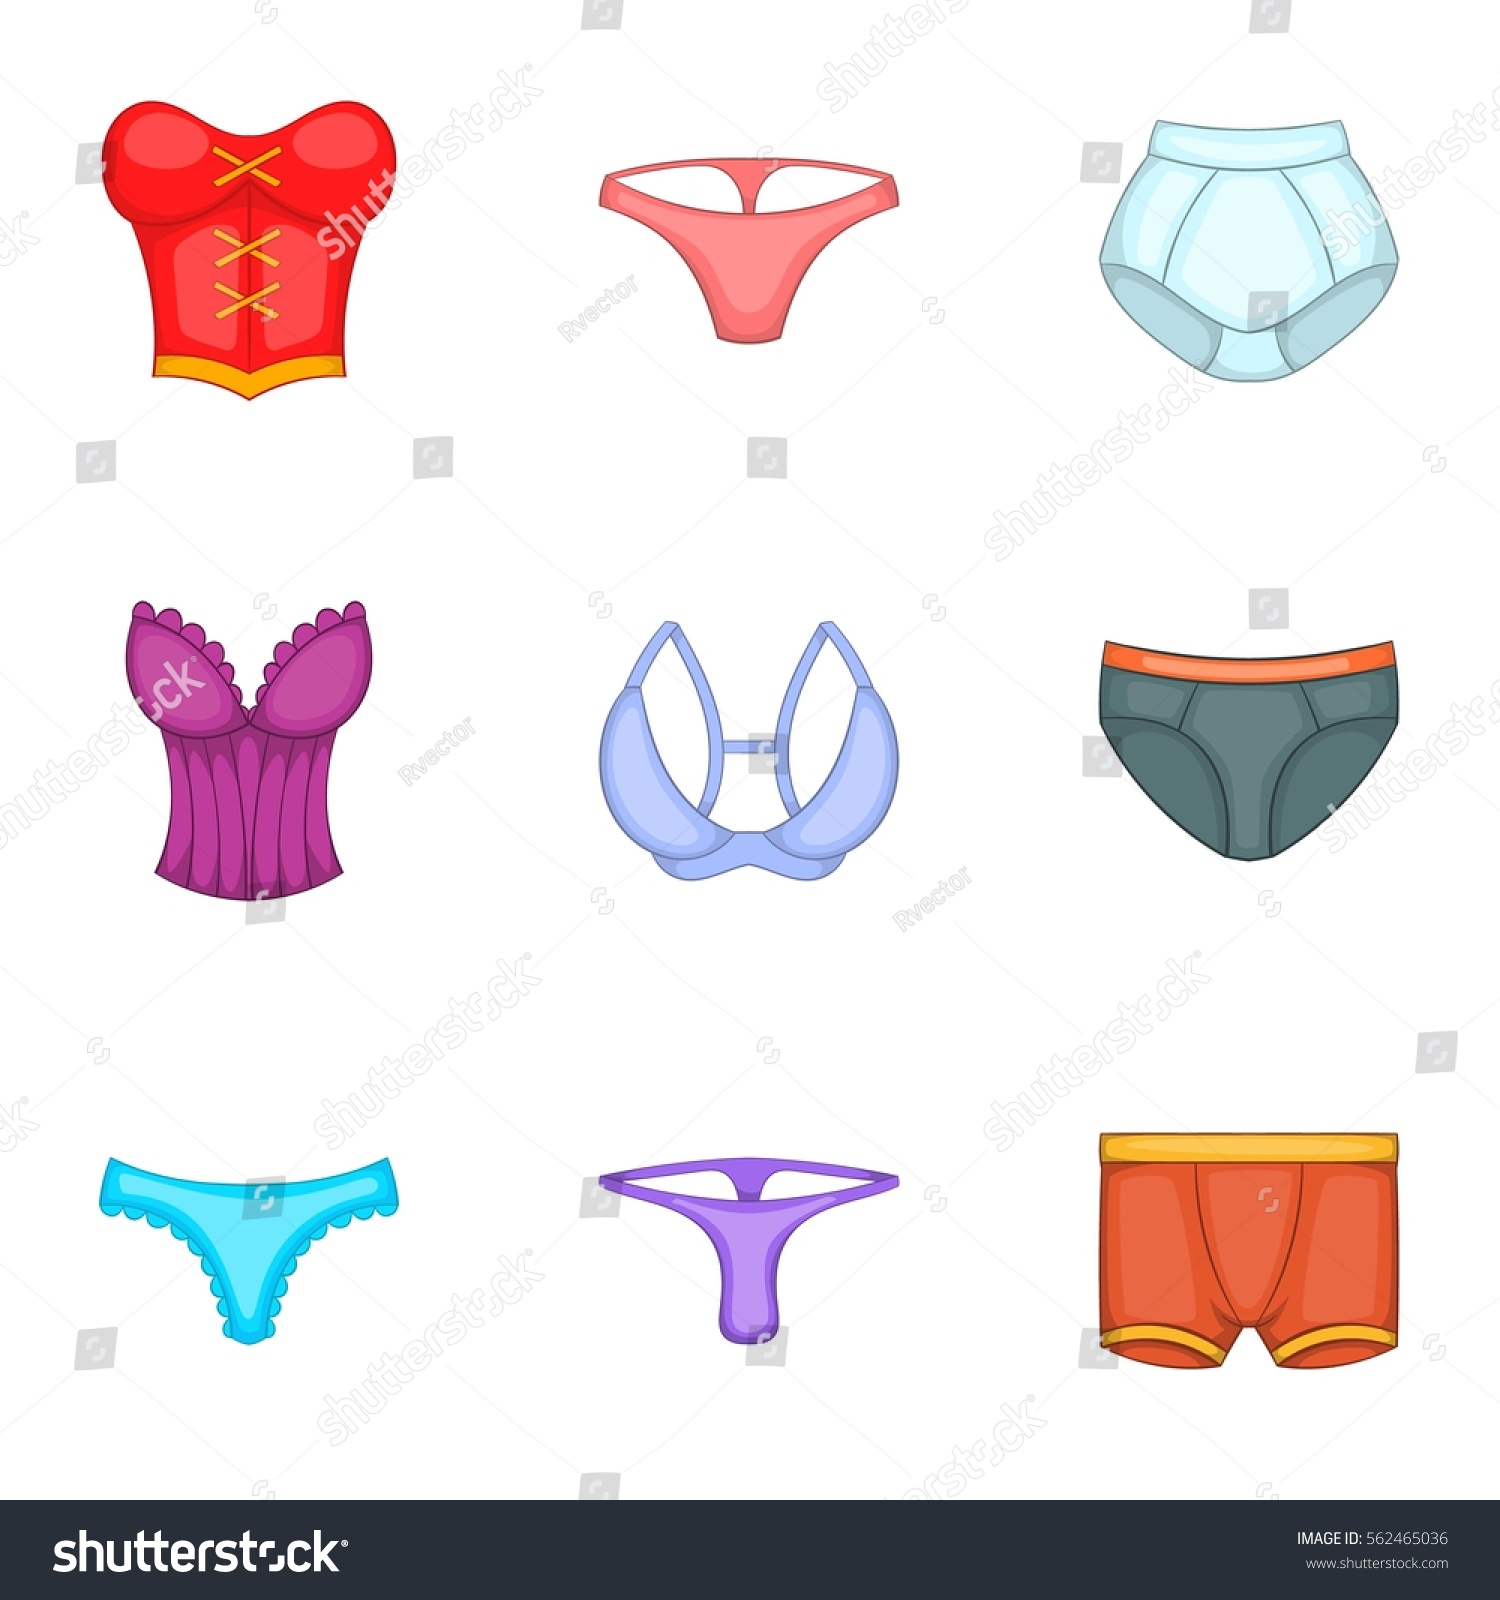 Underwear Clothes Icons Set Cartoon Illustration Stock Vector (Royalty Free...